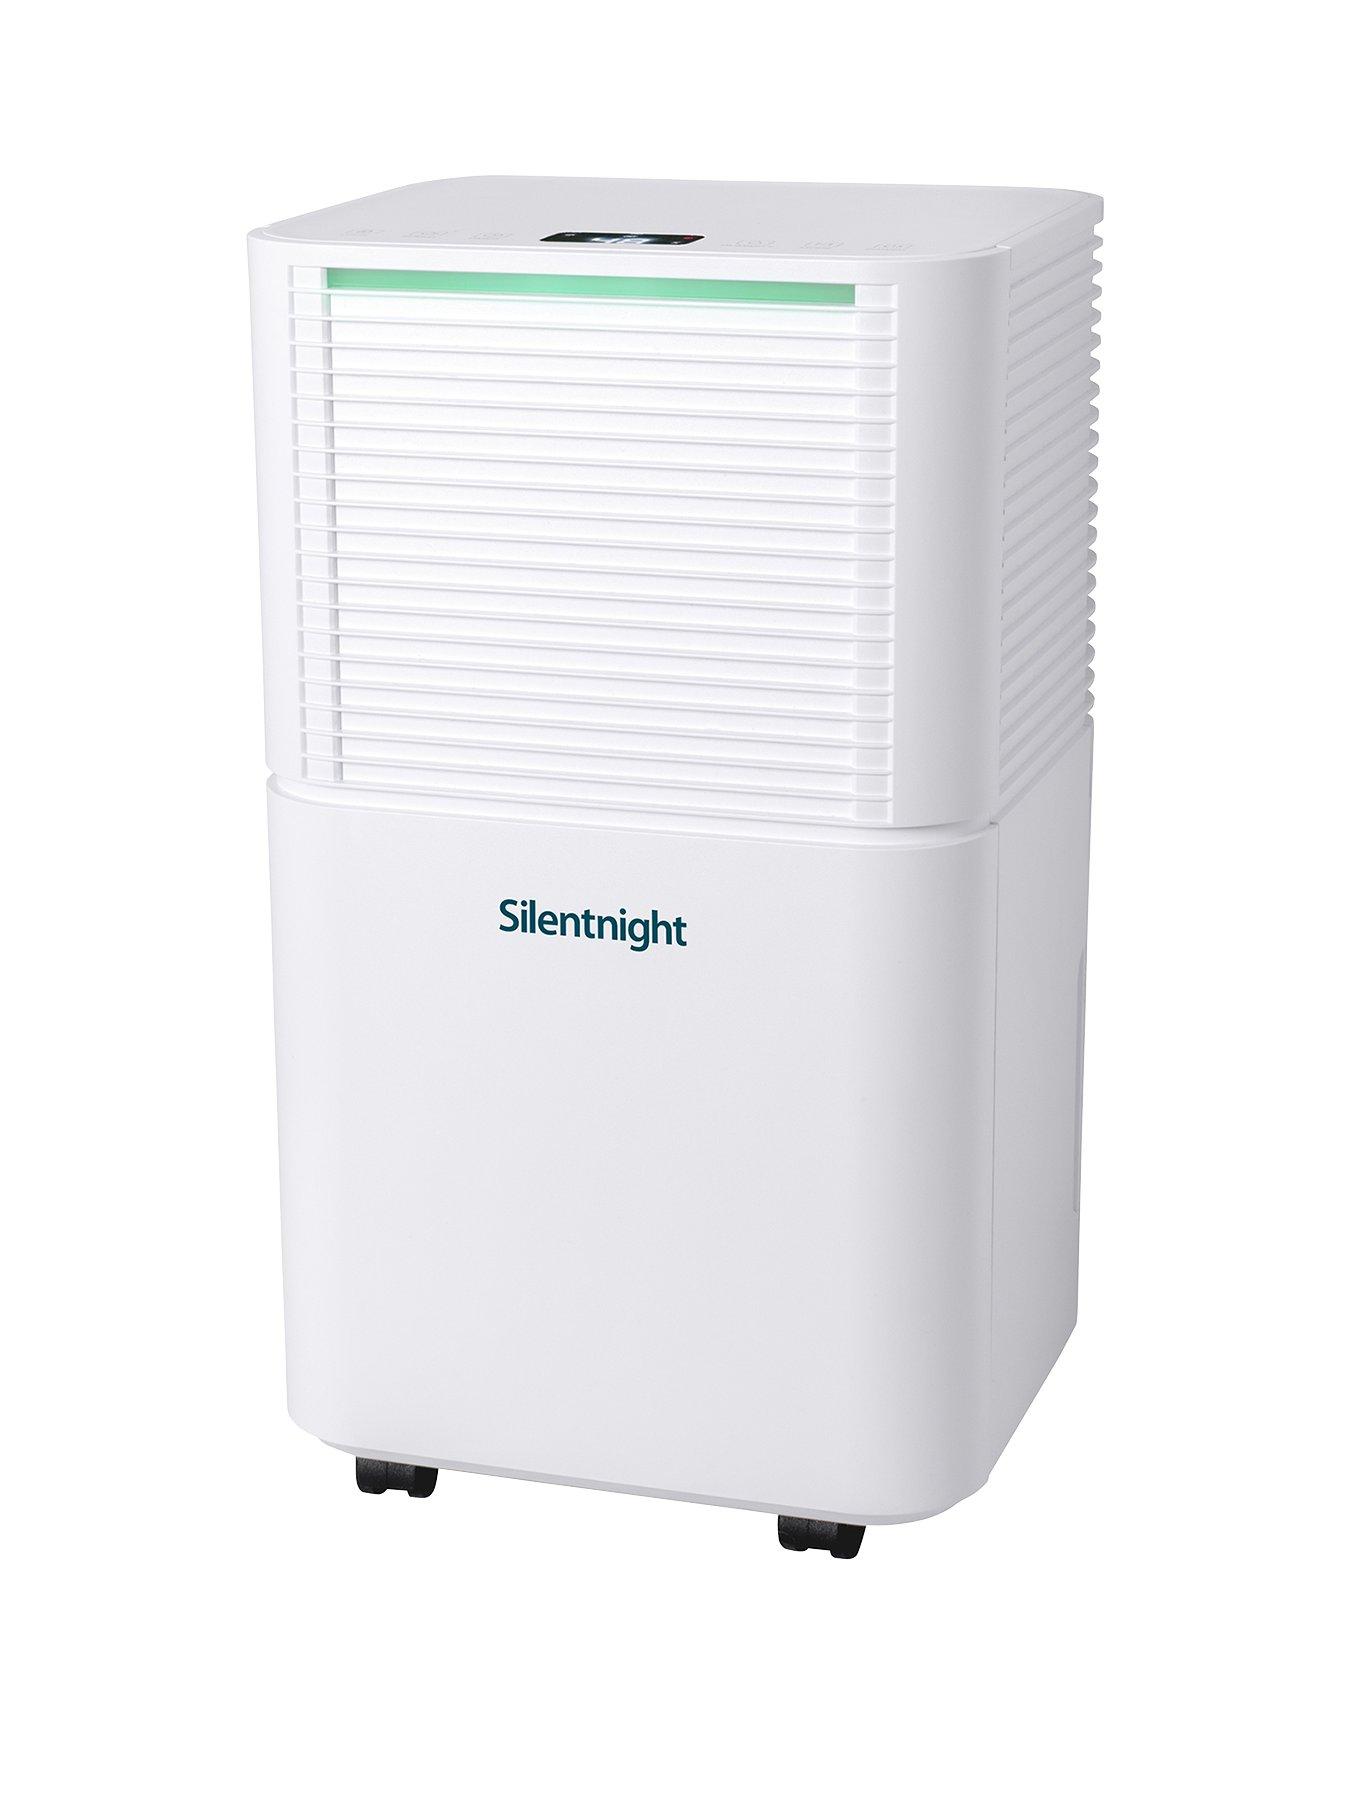 Silentnight Airmax 1200 12L Capacity Dehumidifier